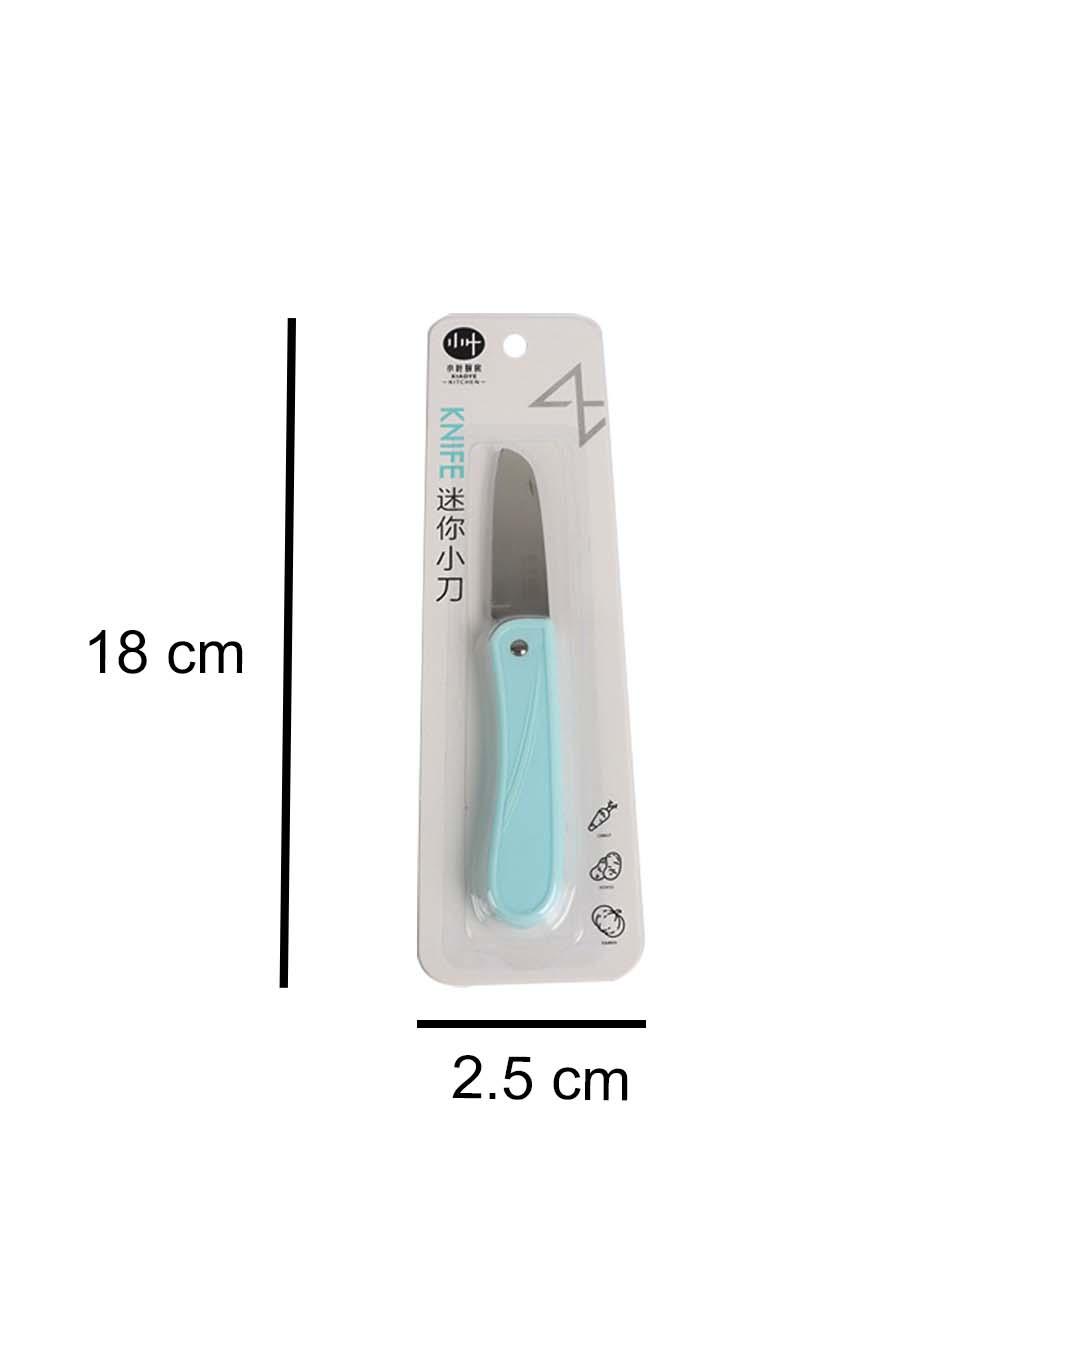 Kitchen Solid Knife, Turquoise, Plastic - MARKET 99